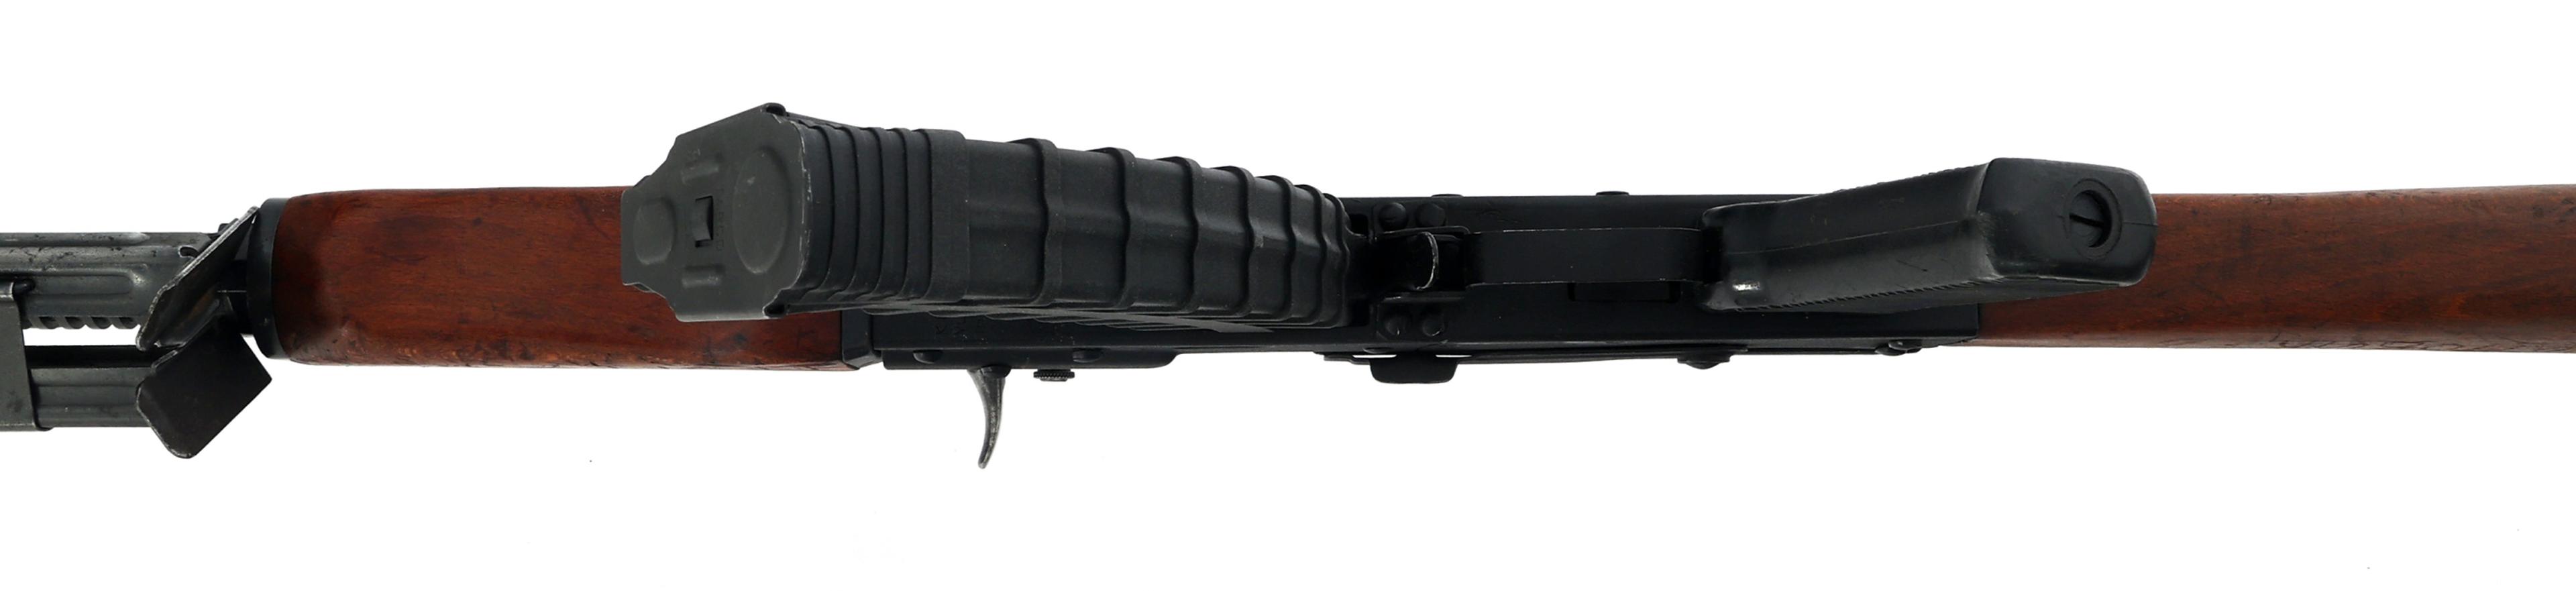 VULCAN MODEL V47 7.62x39mm CALIBER RIFLE